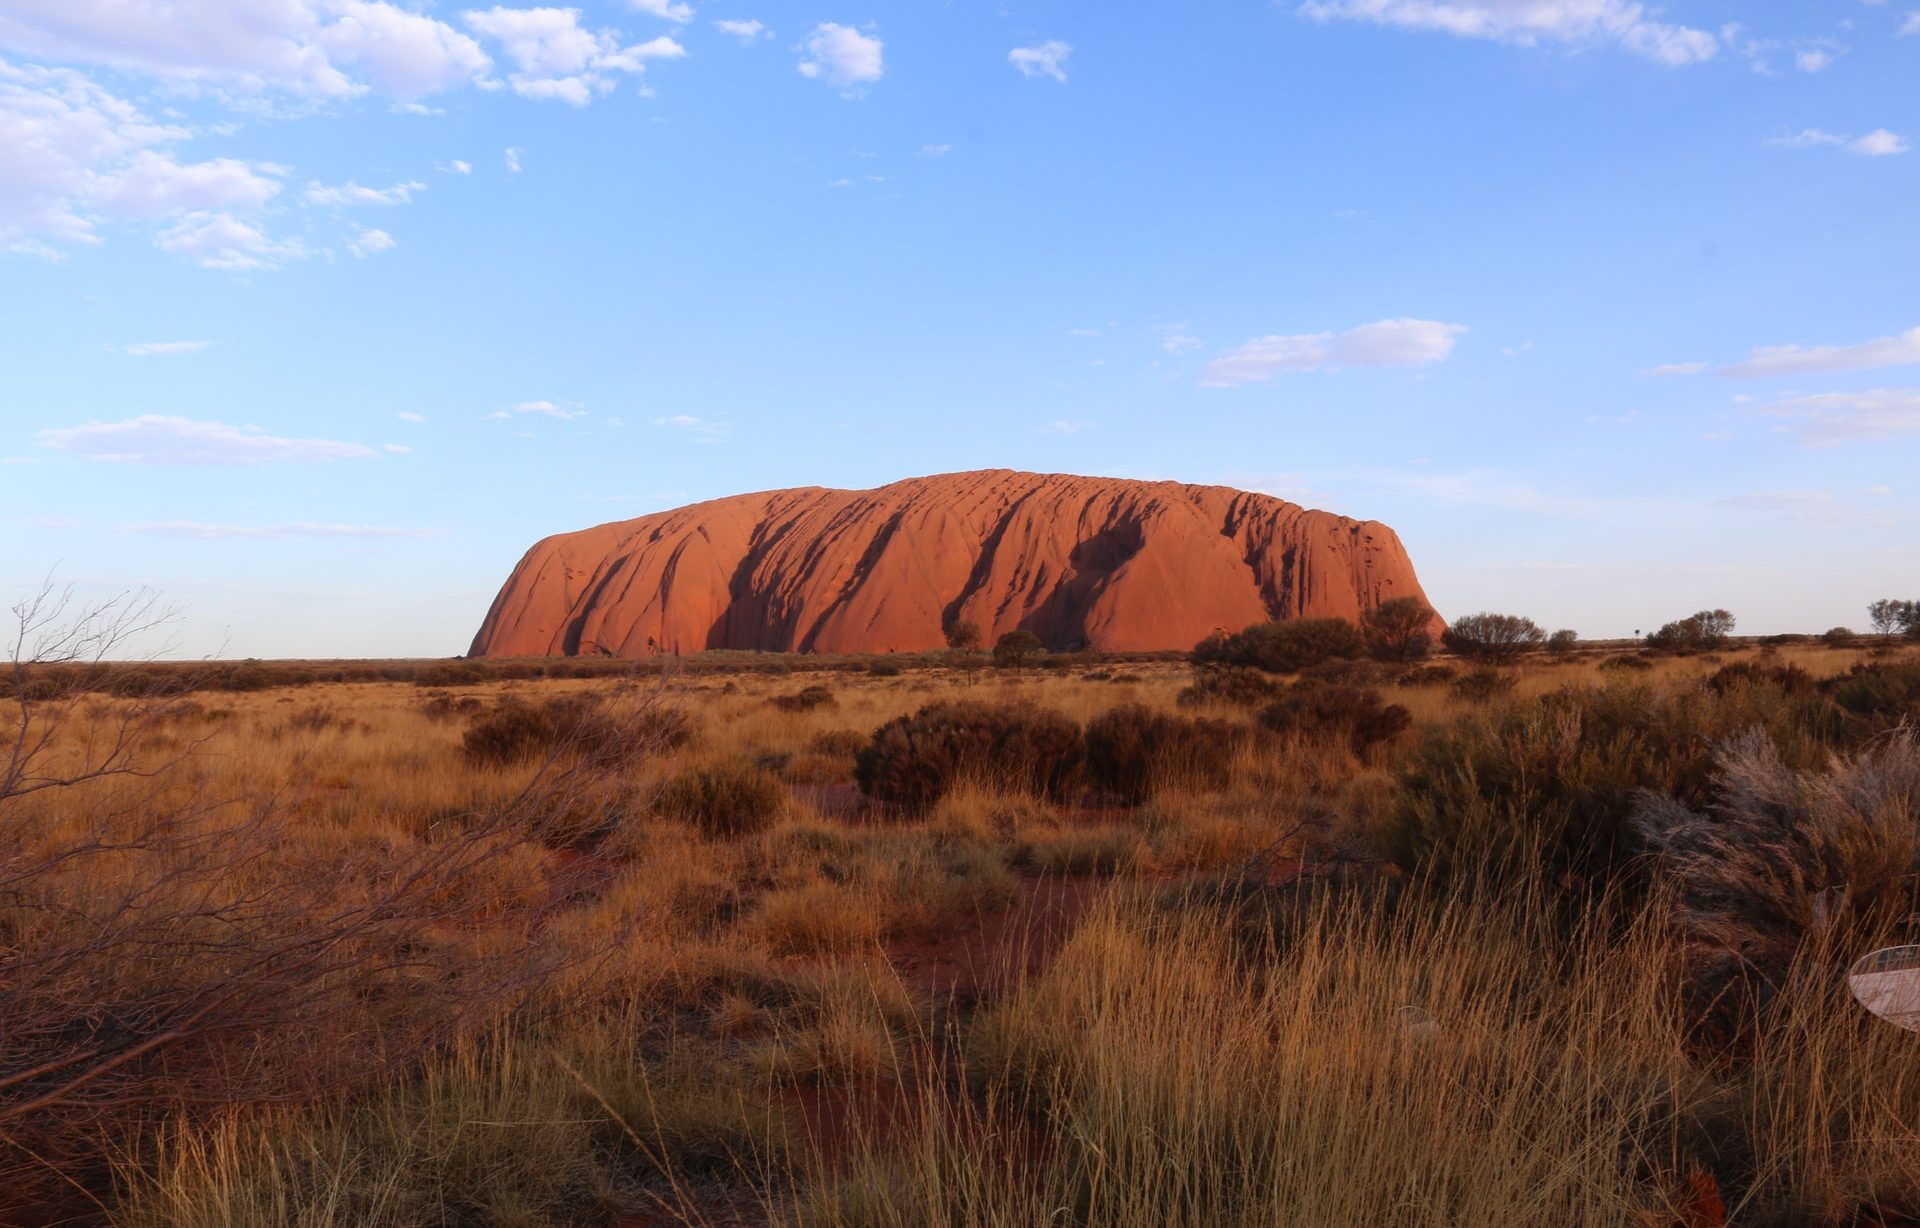 Uluru in Australia: What not to do